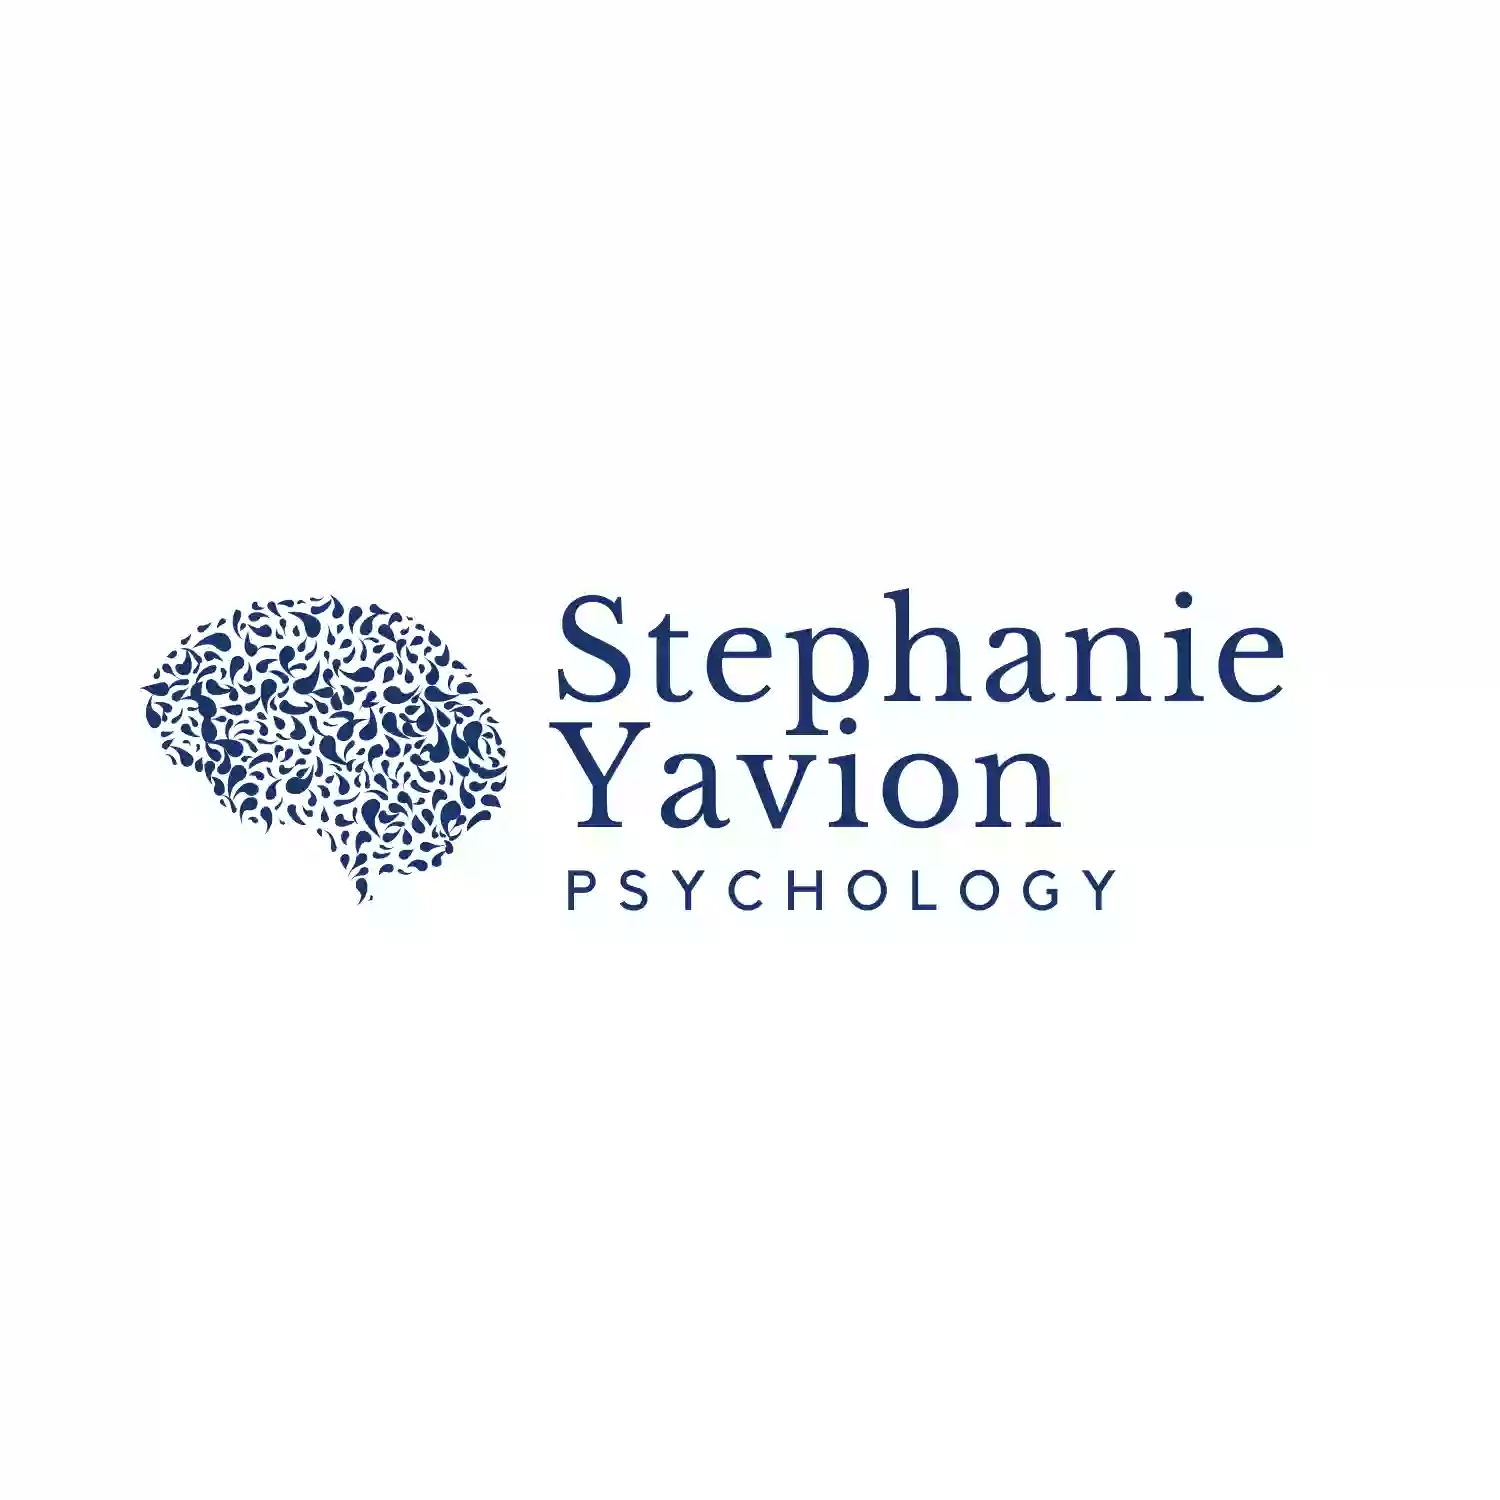 Stephanie Yavion Psychology